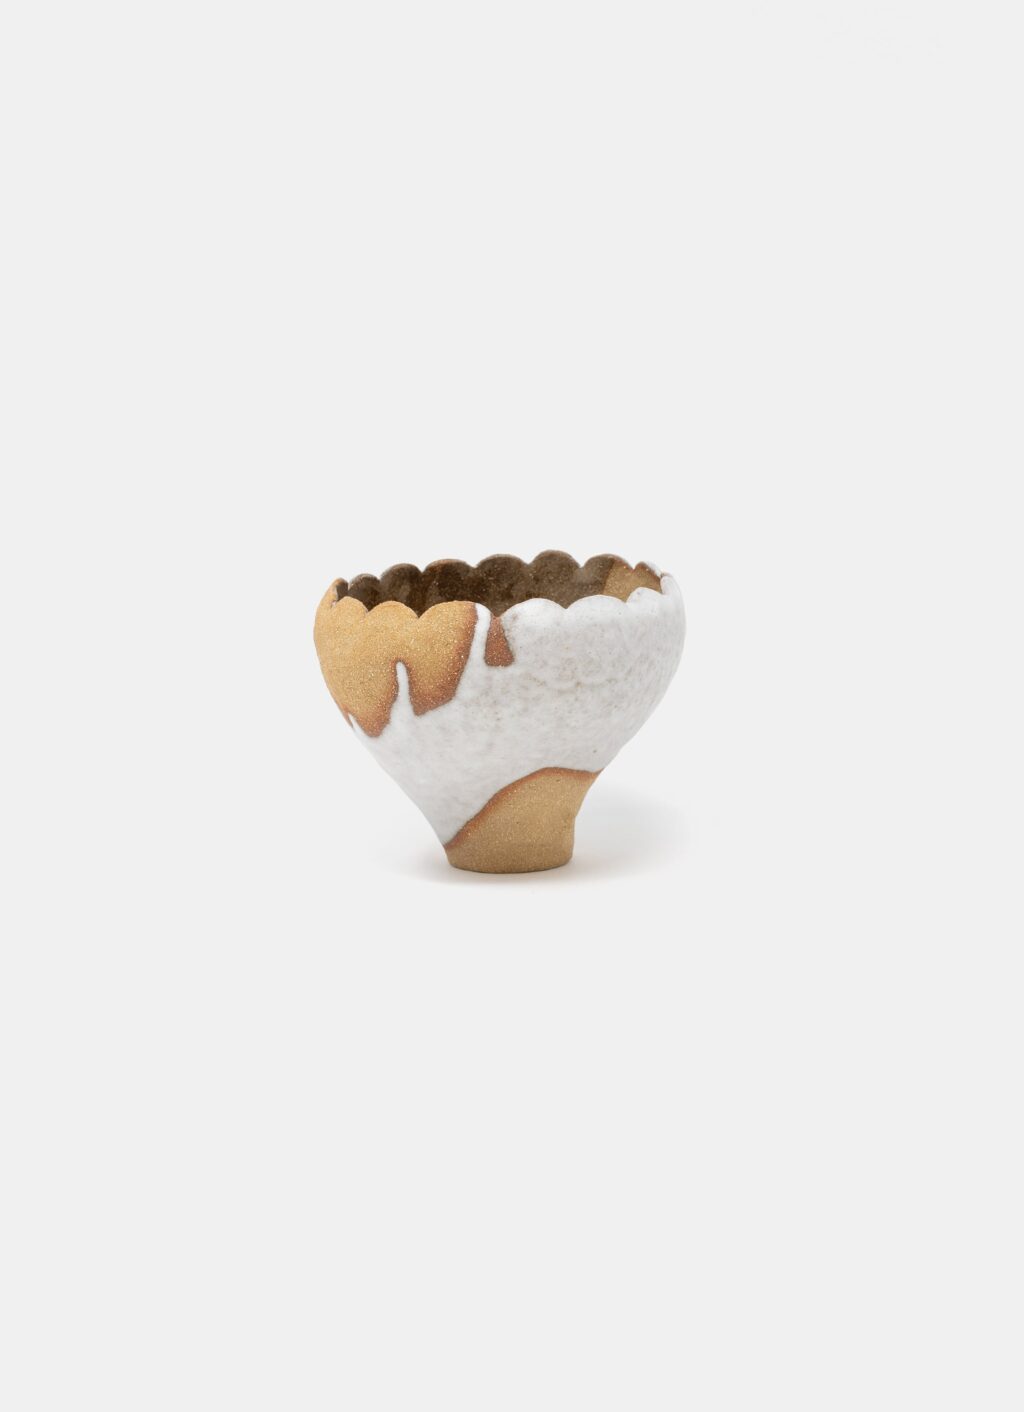 Mano Mani - Ikebana Vase - Light Brown Stoneware and white glaze - 2